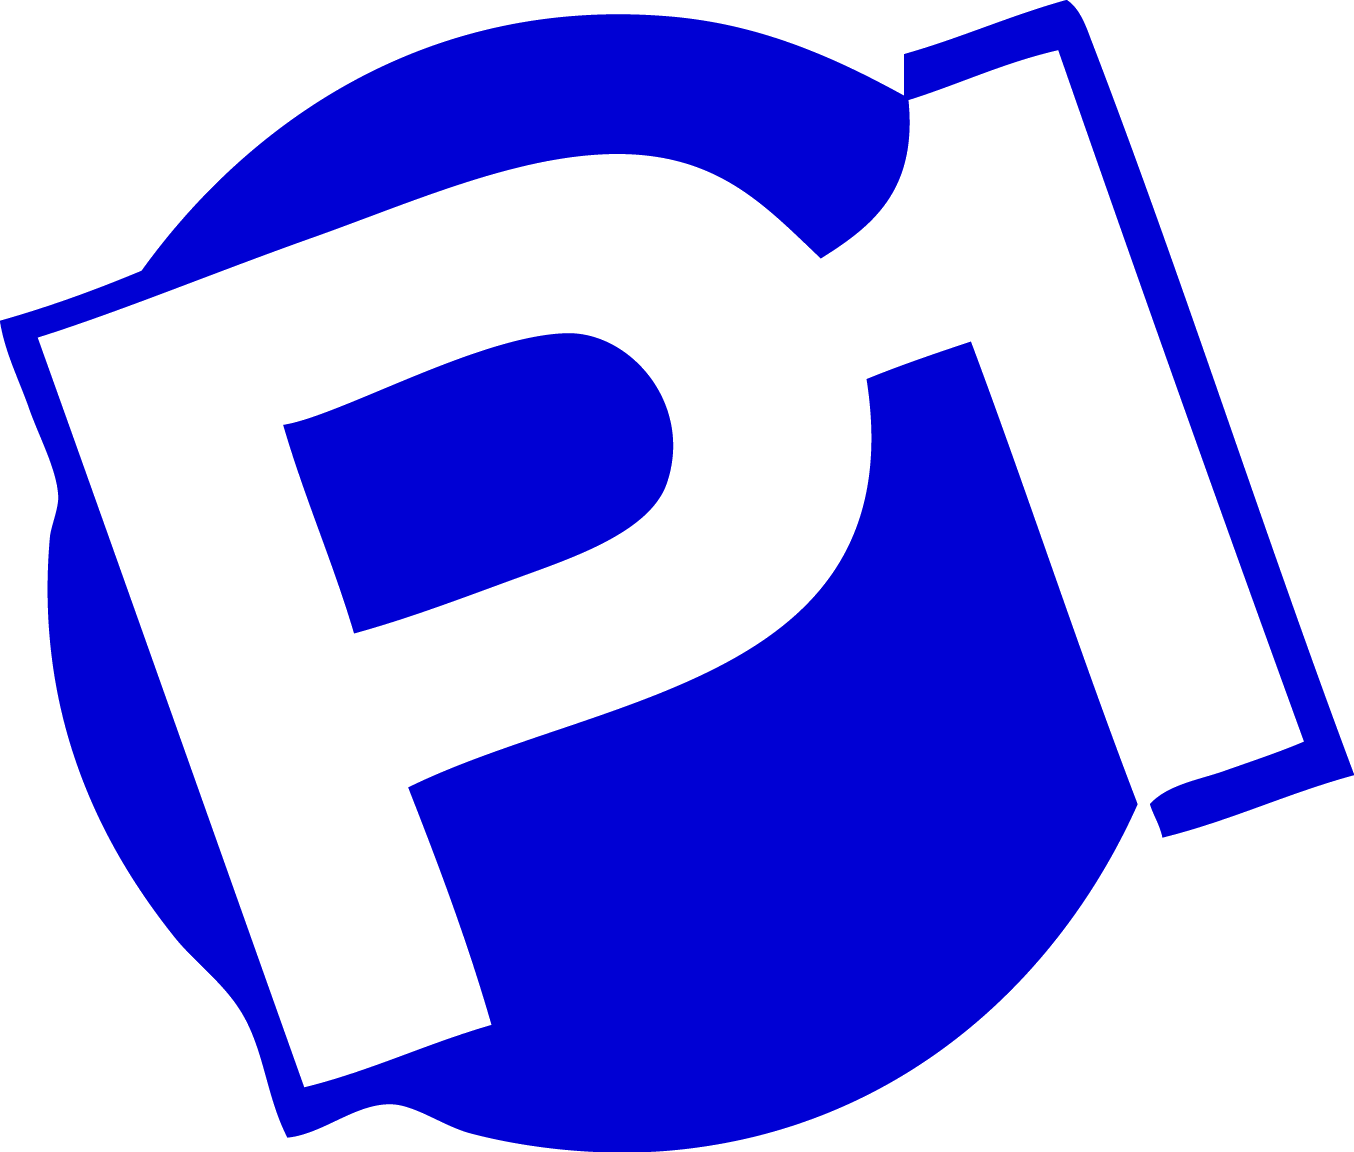 Тел 05. Канал Польше логотип. Телеканал Polonia 1. Польша карта на телеканале.